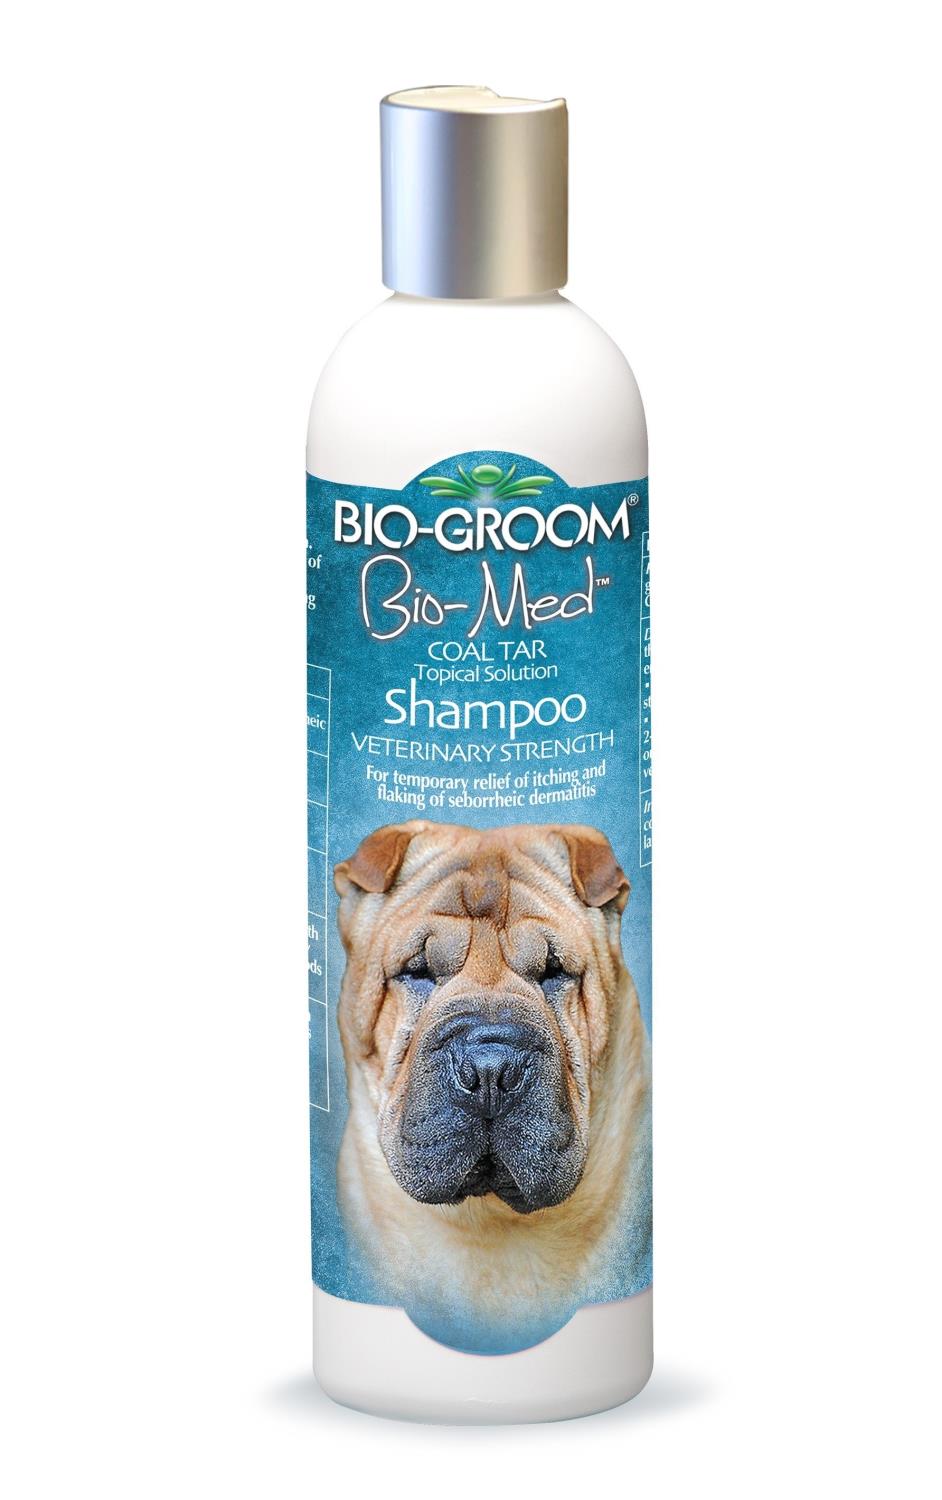 Bio-broom Bio-med shampoo veterinary strength 355ml.